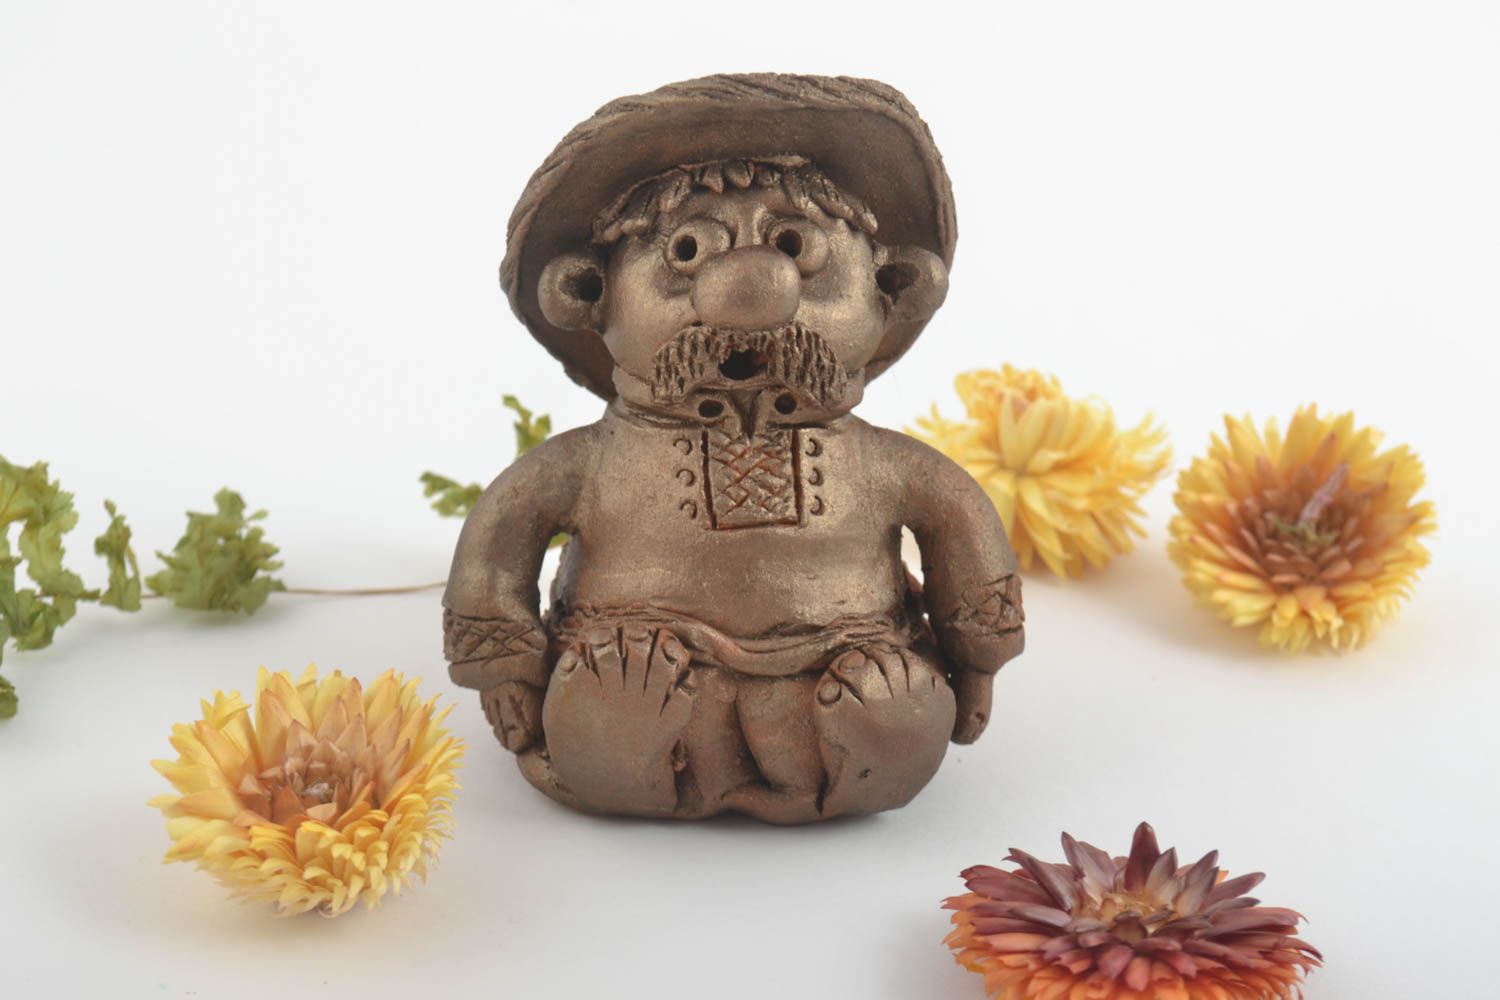 Handmade ceramic figurine unusual statuette miniature sculpture art gift ideas photo 1